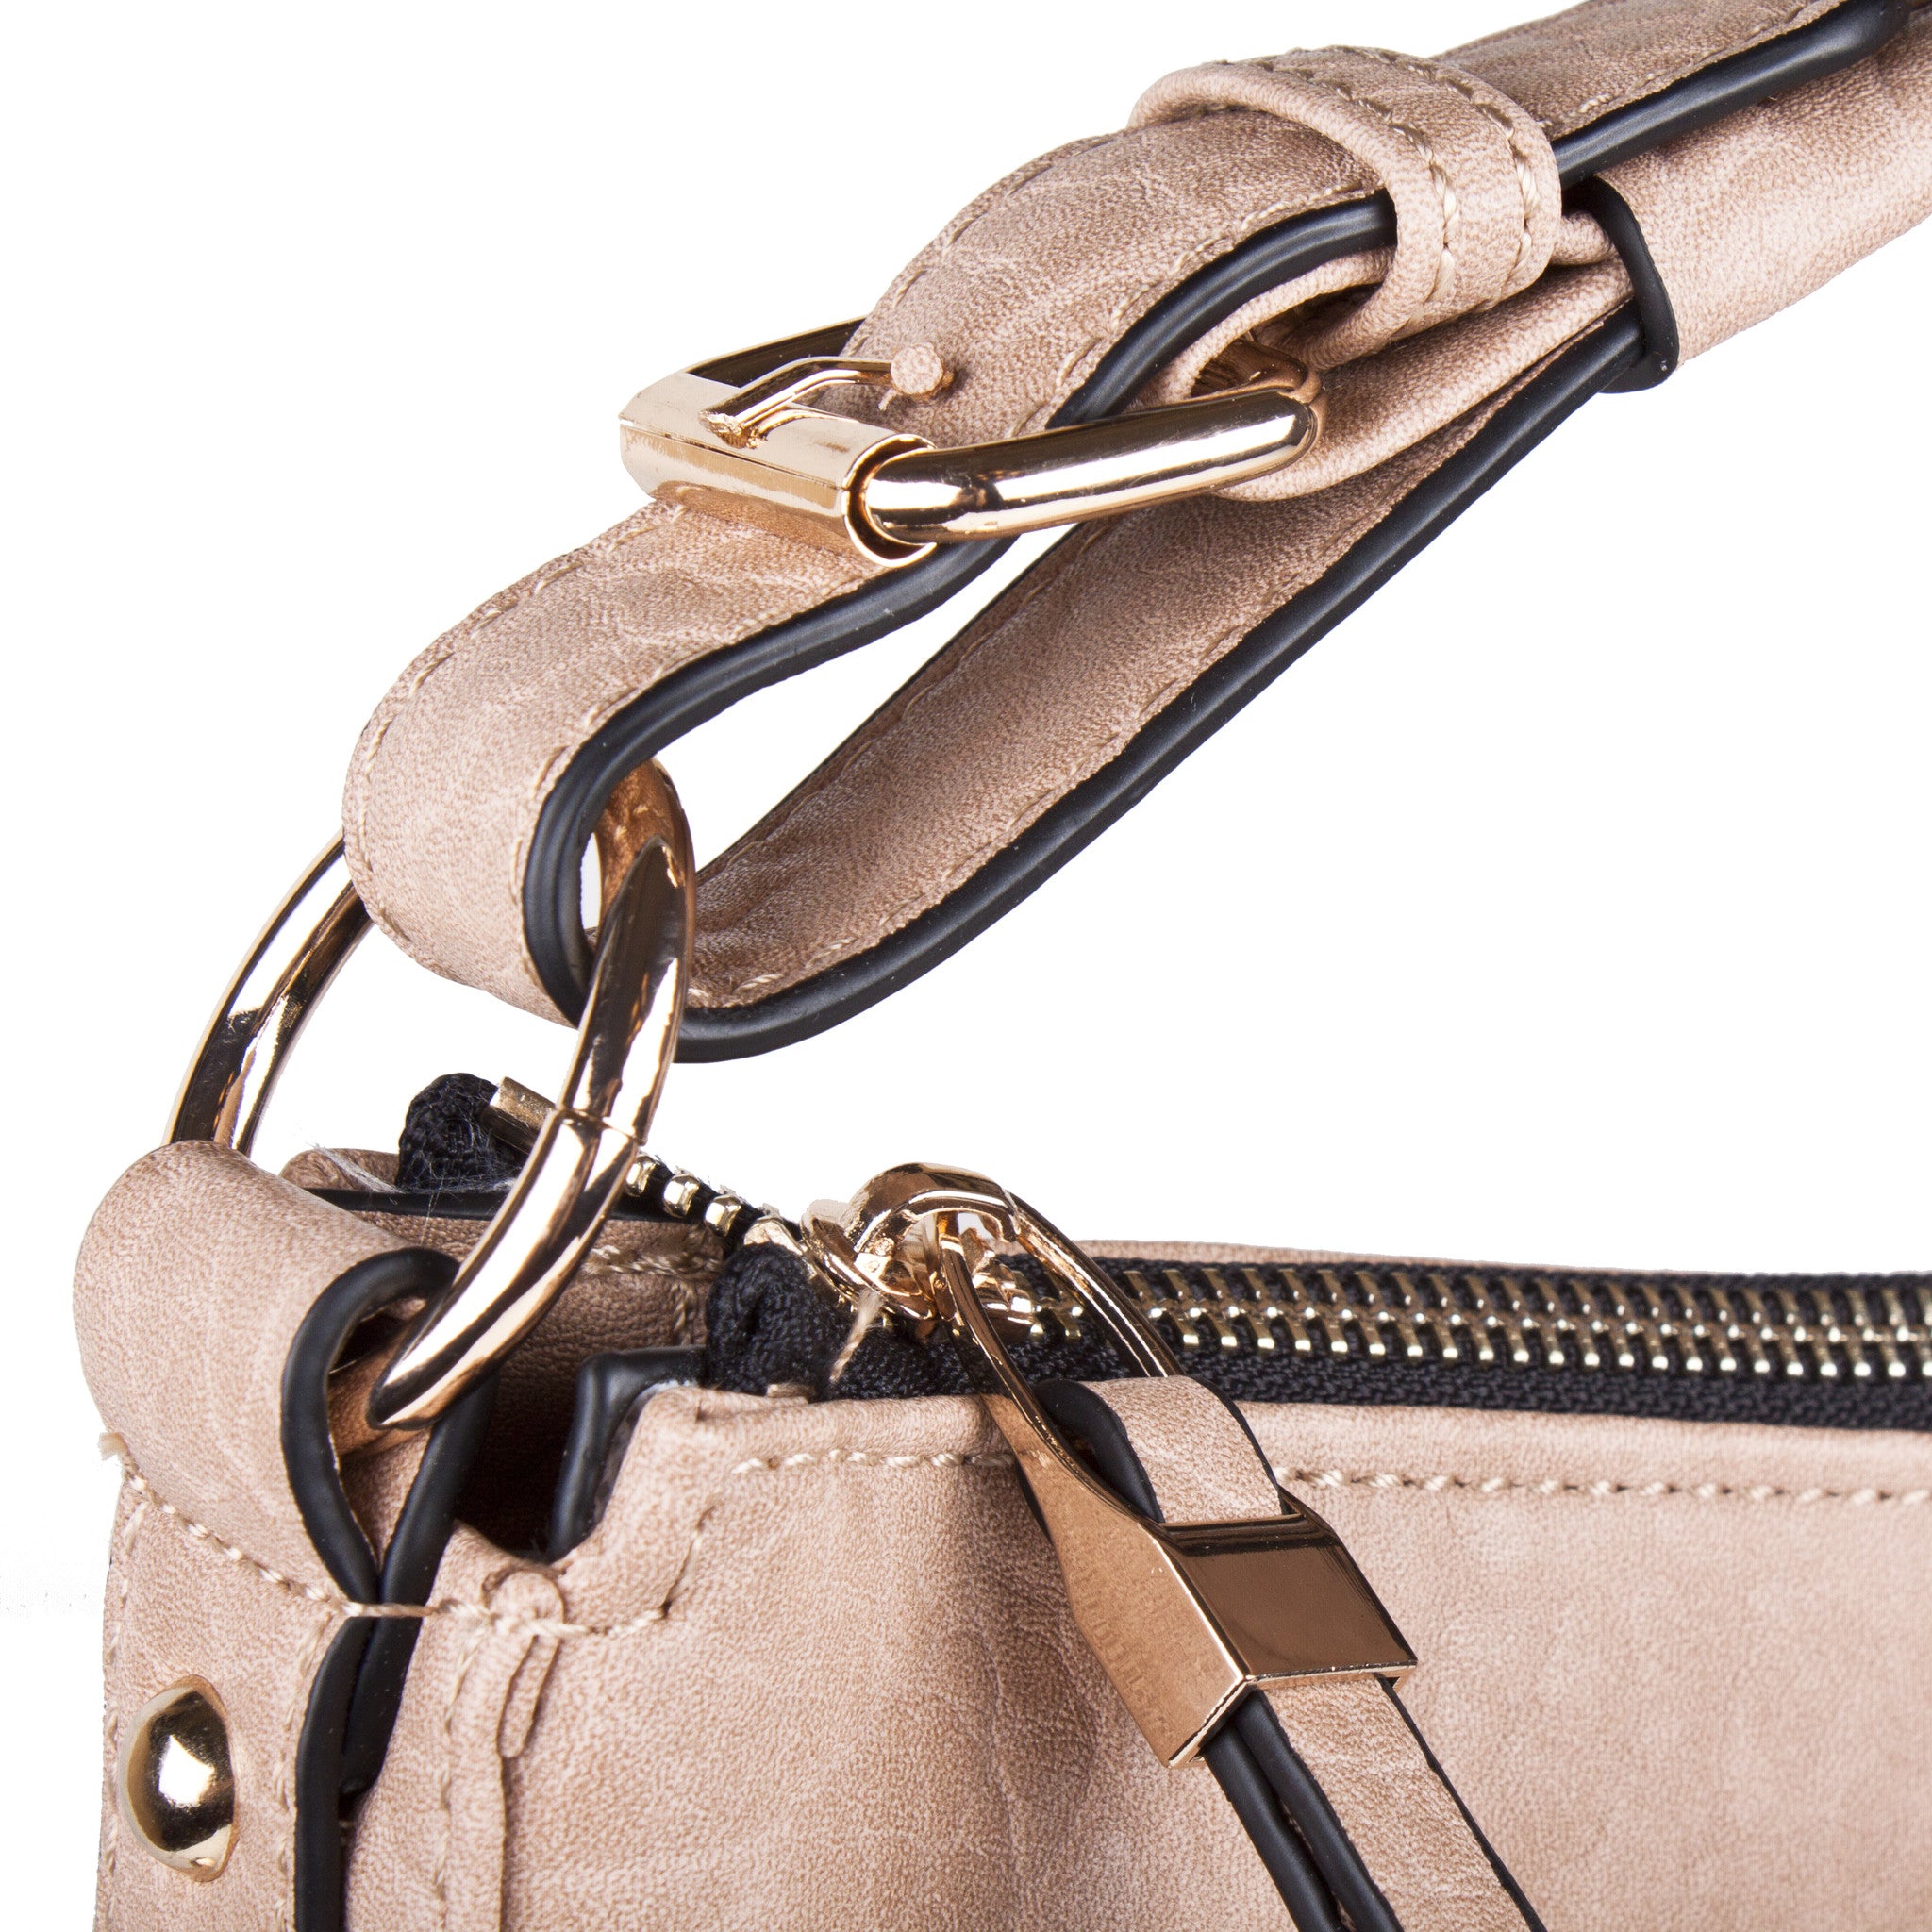 Moda Luxe 'Daytona' Leather Shoulder Bag